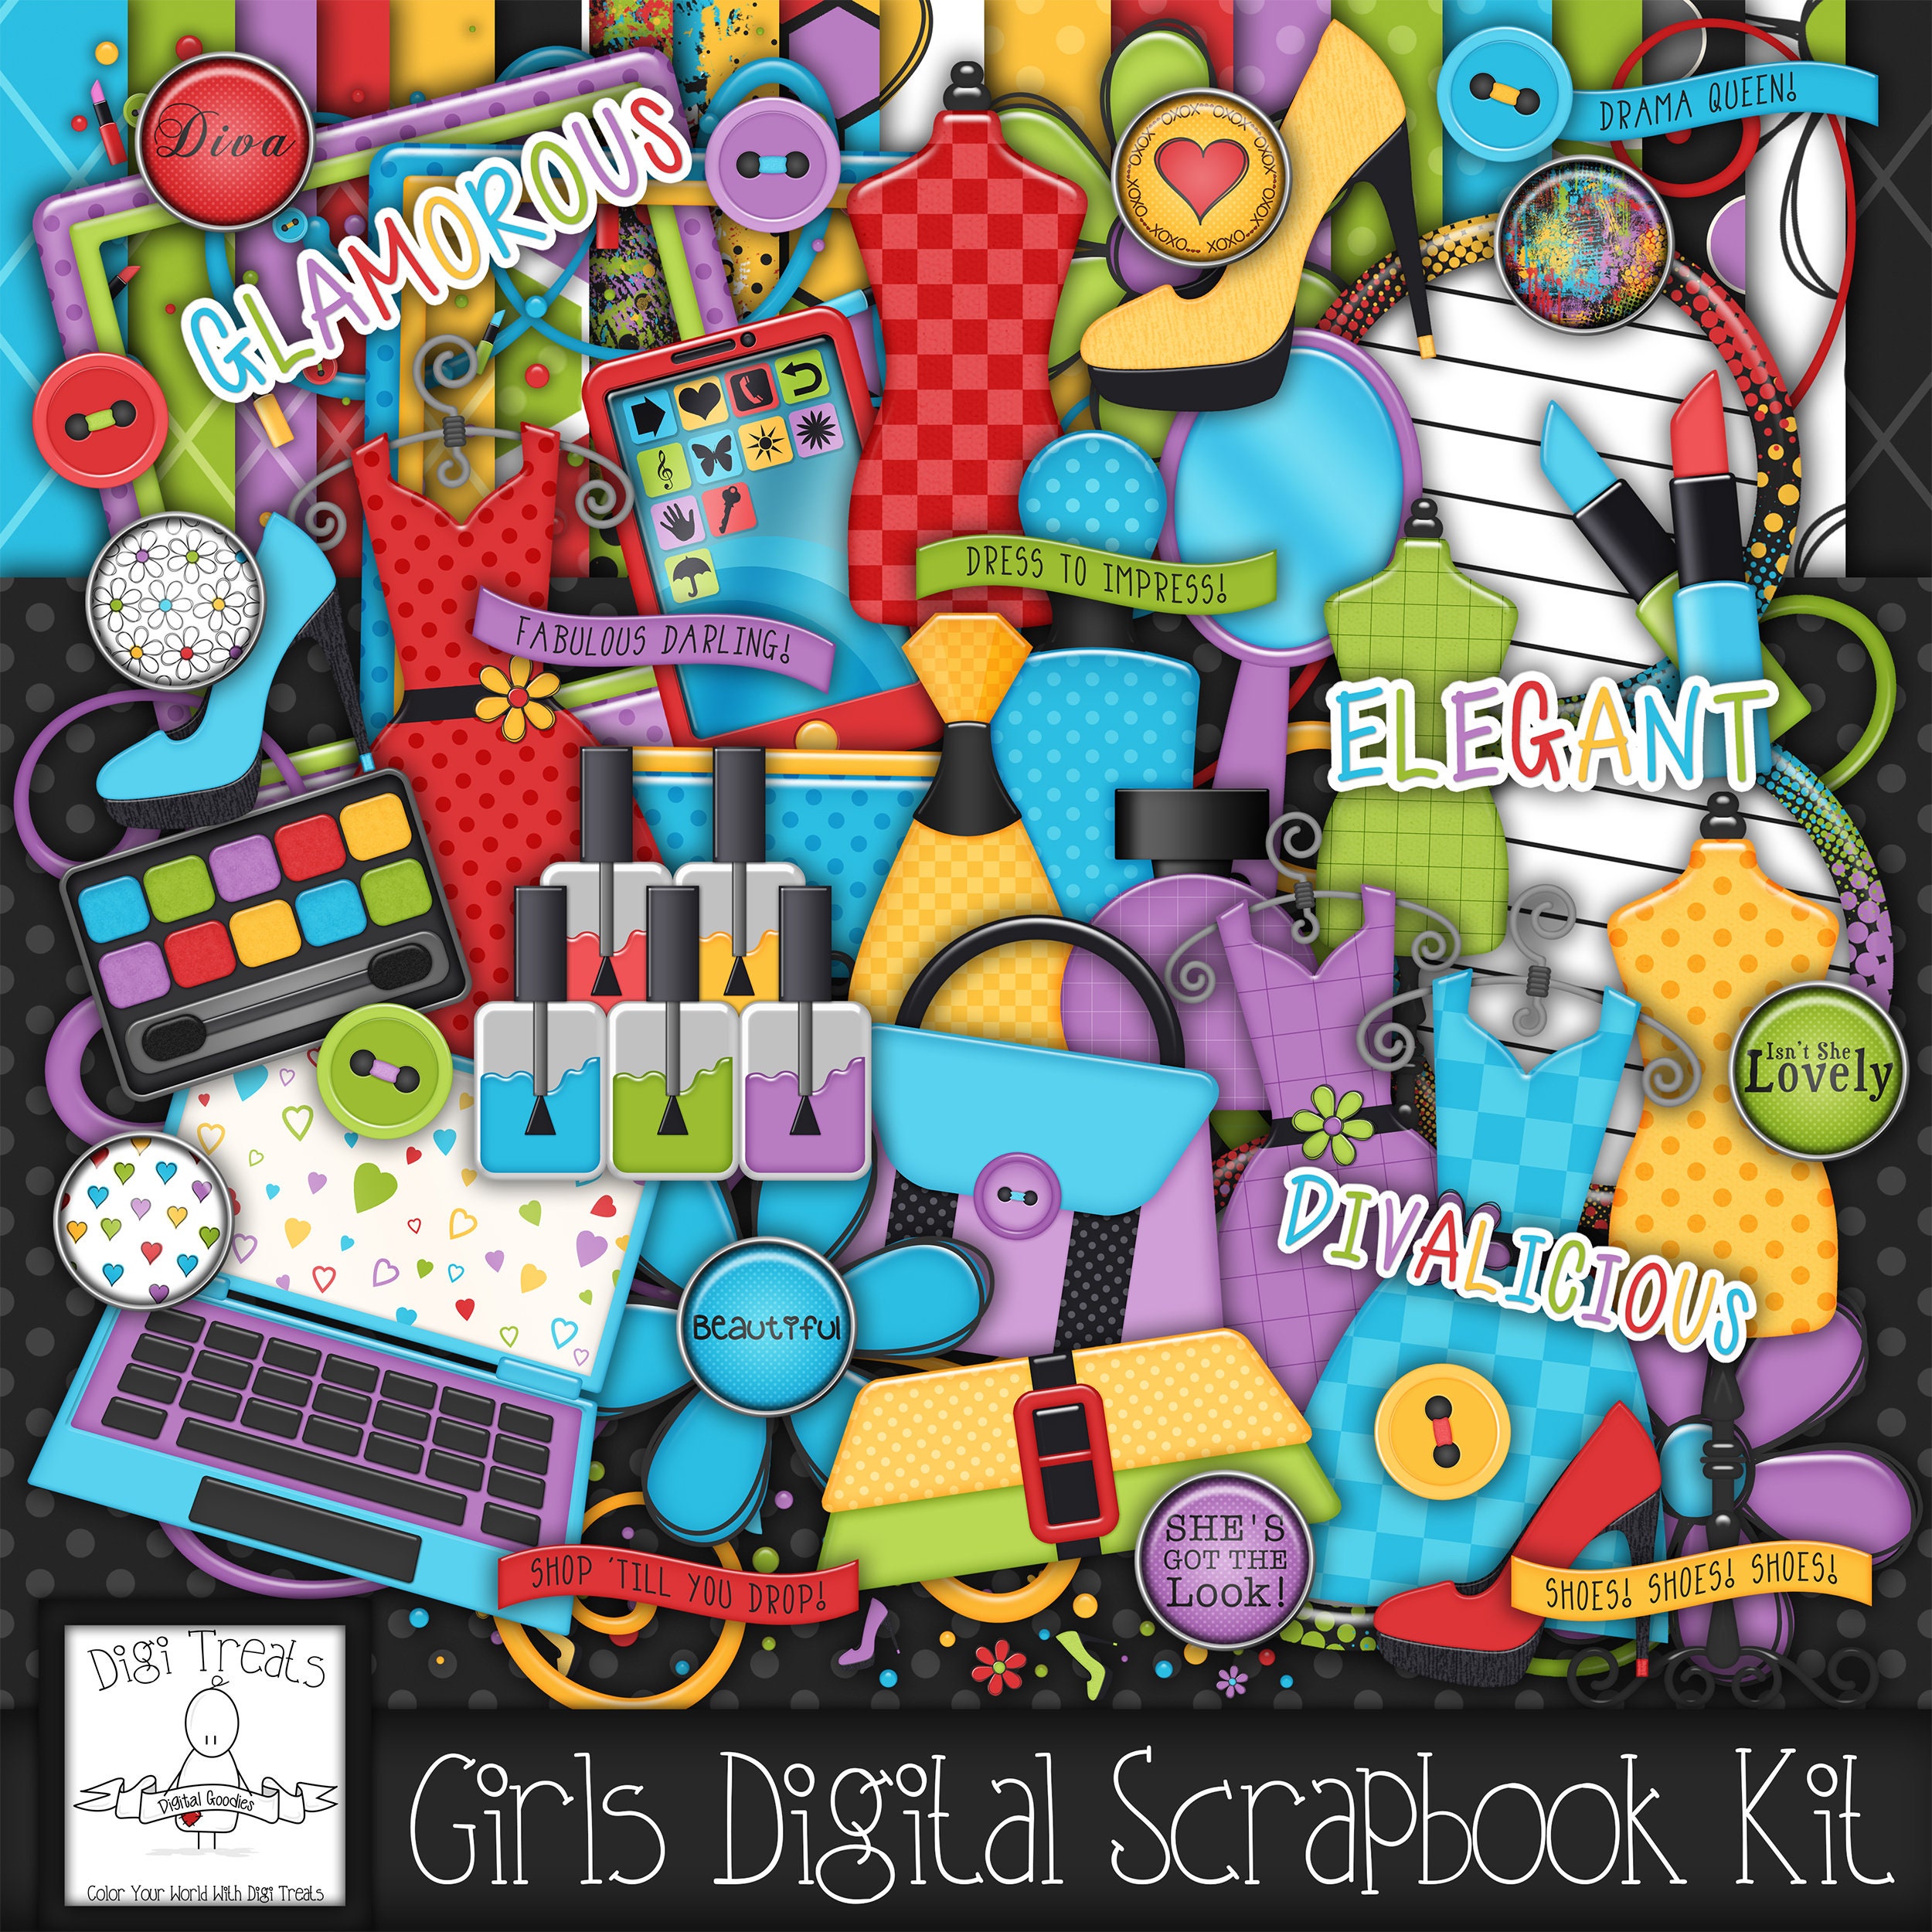 Divalicious Digital Scrapbook Kit. Girls, Teens Themed Scrapbook